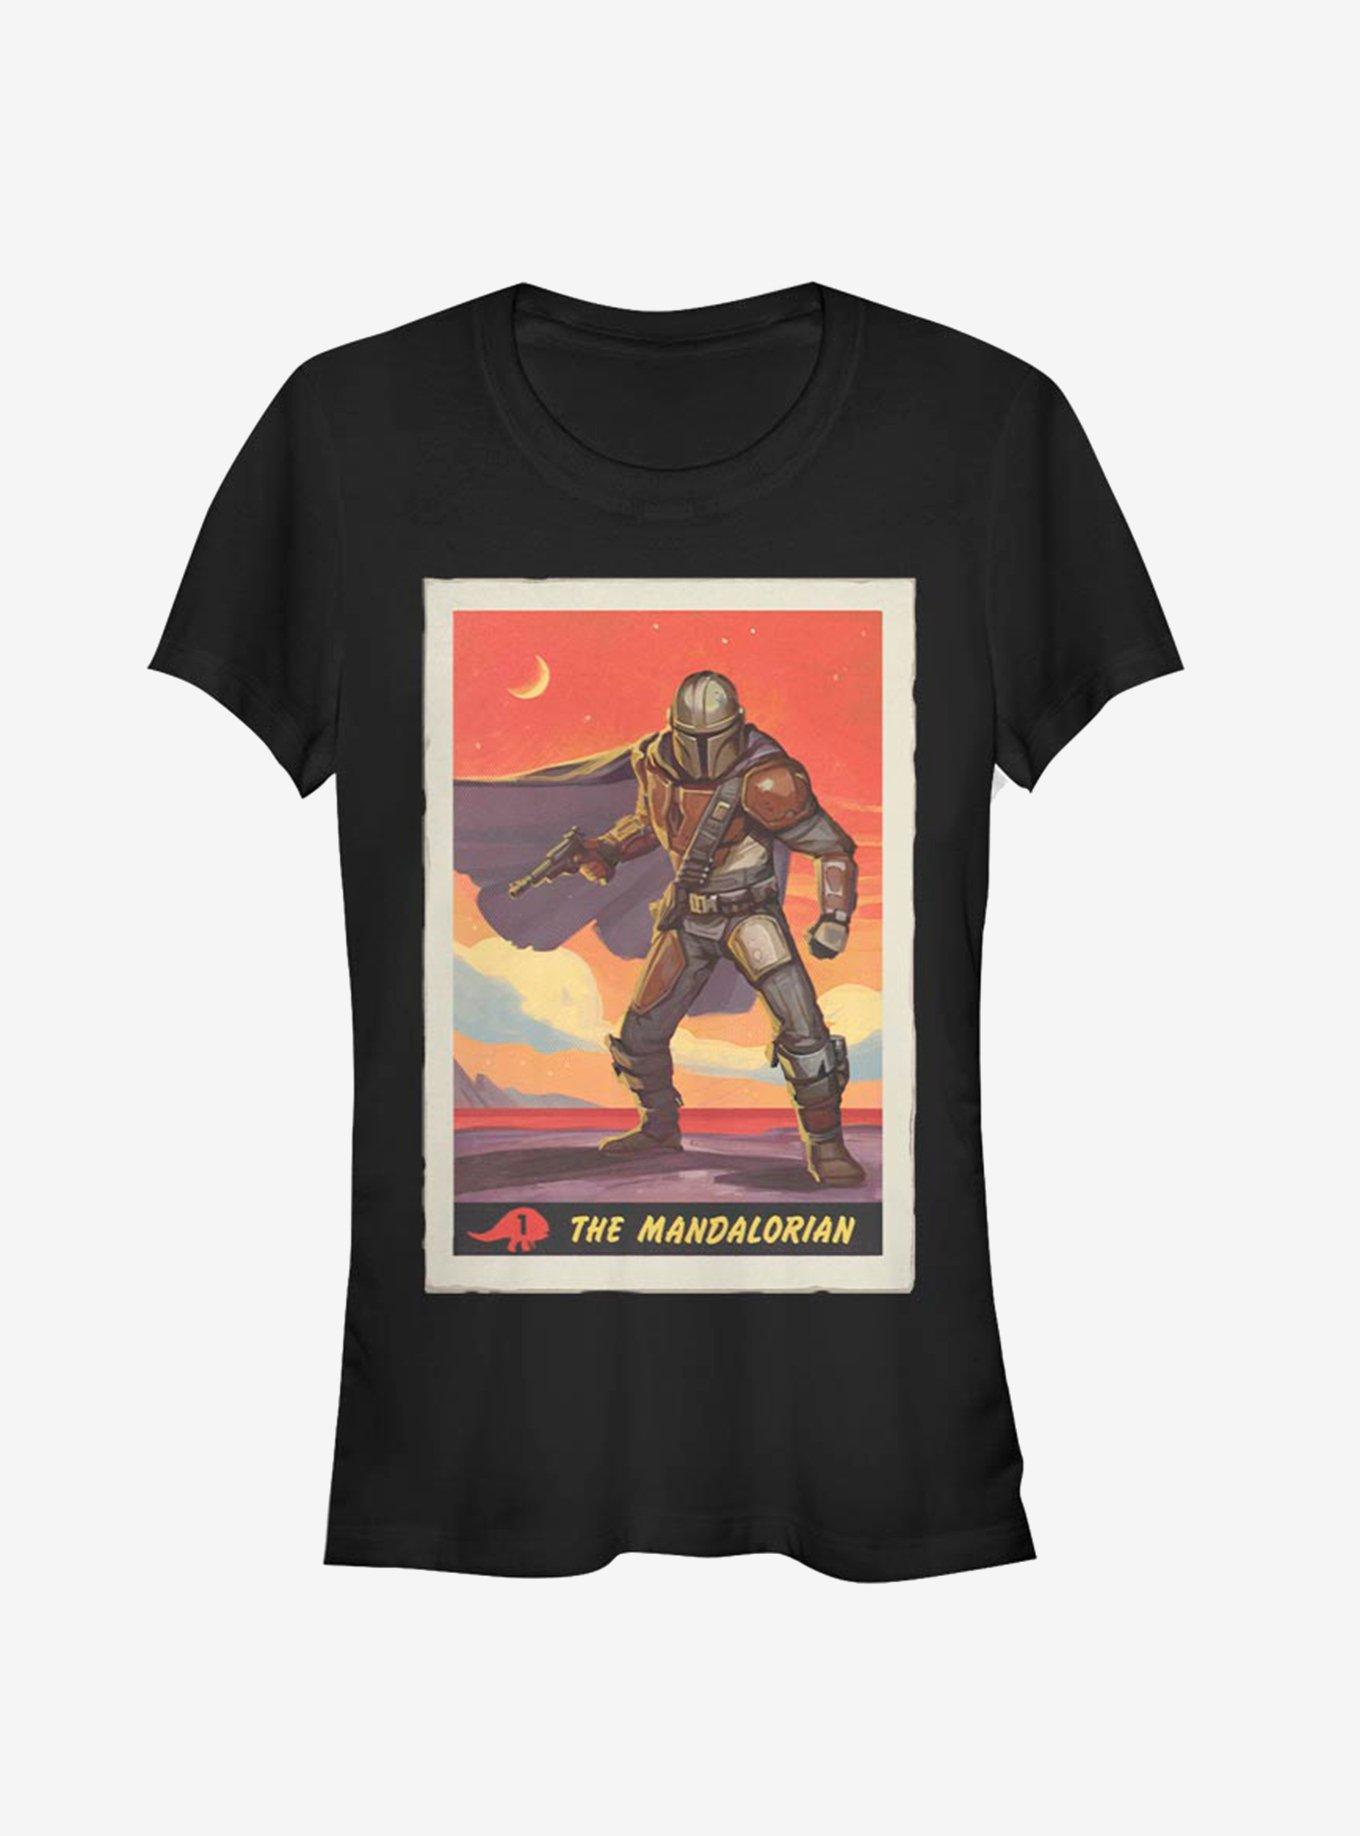 Star Wars The Mandalorian Poster Girls T-Shirt